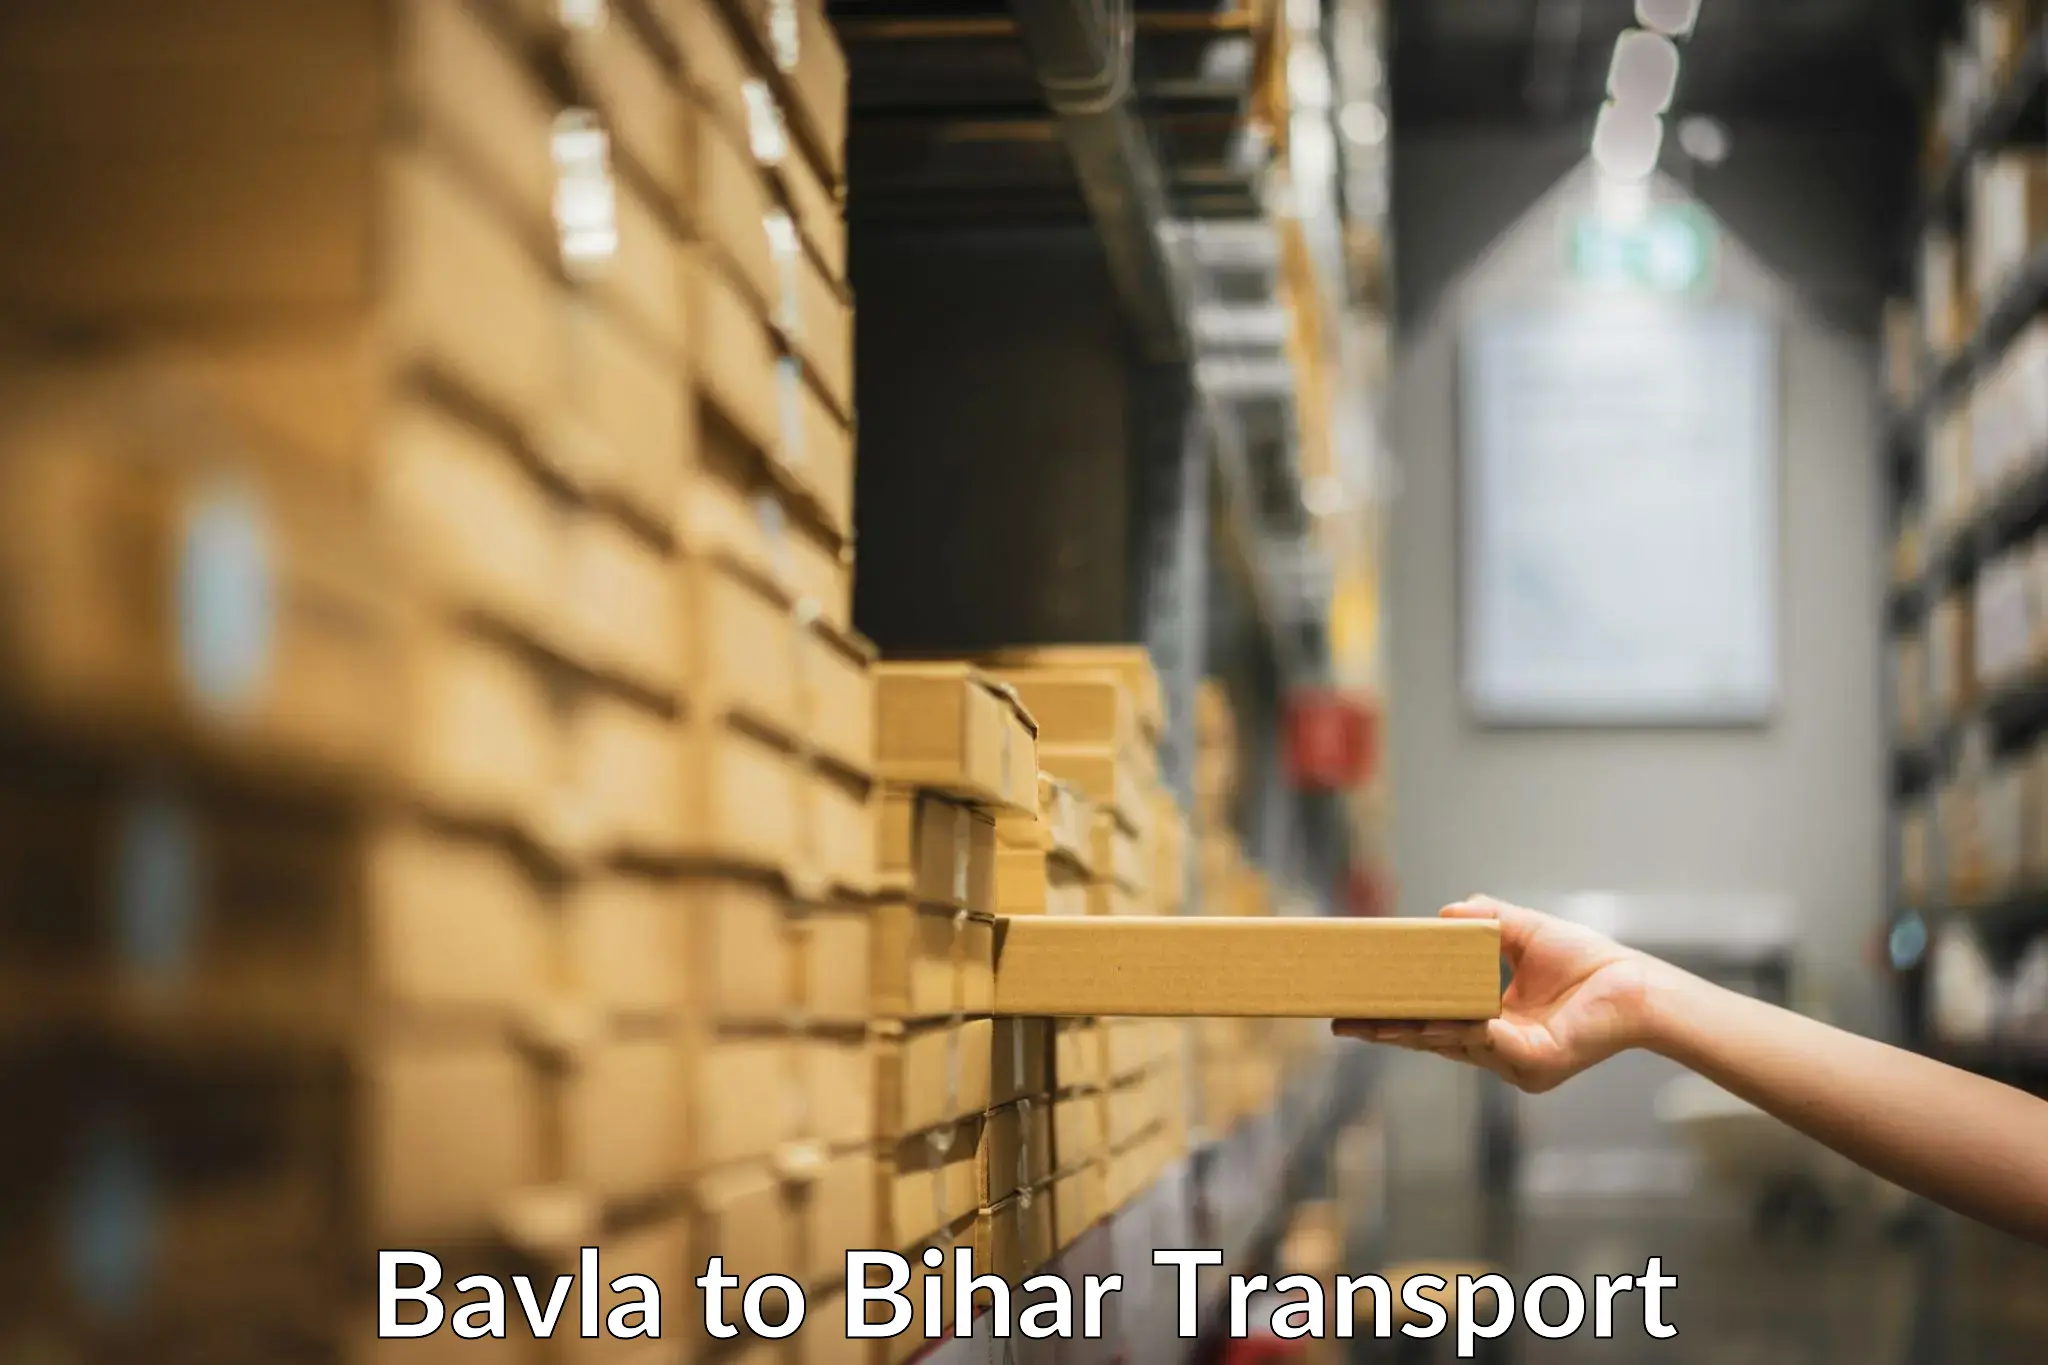 Furniture transport service Bavla to Bihar